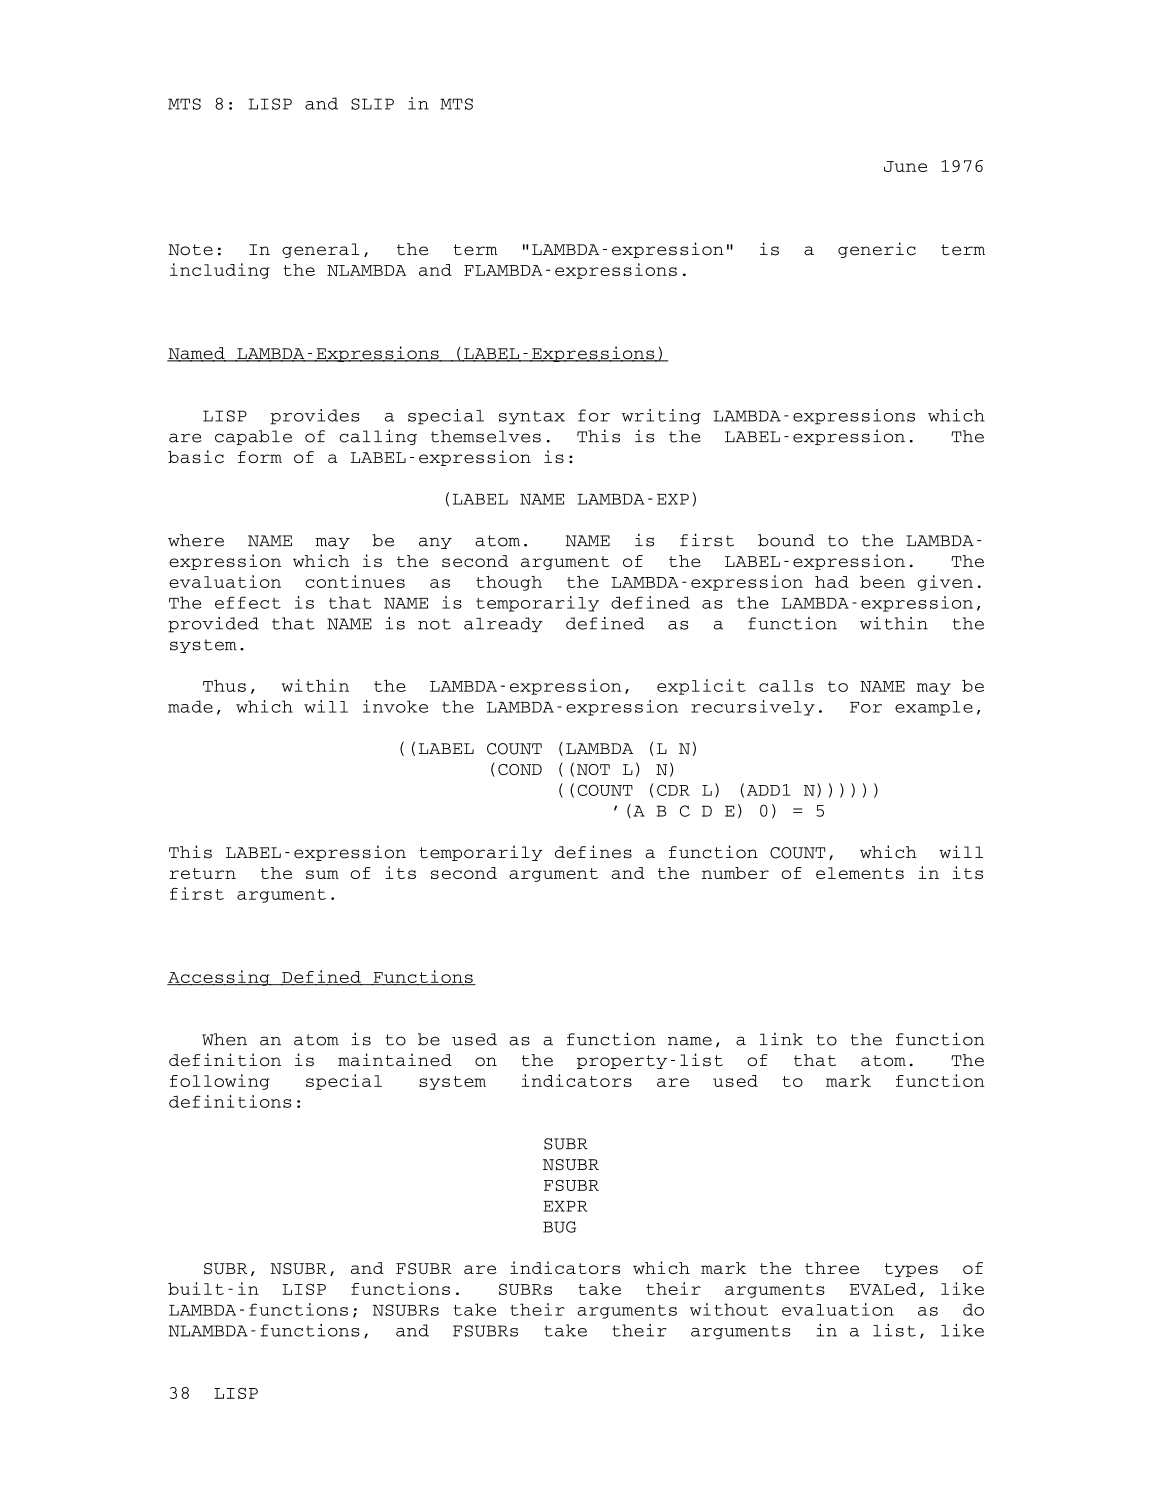 MTS Volume 8 - LISP and SLIP page 38